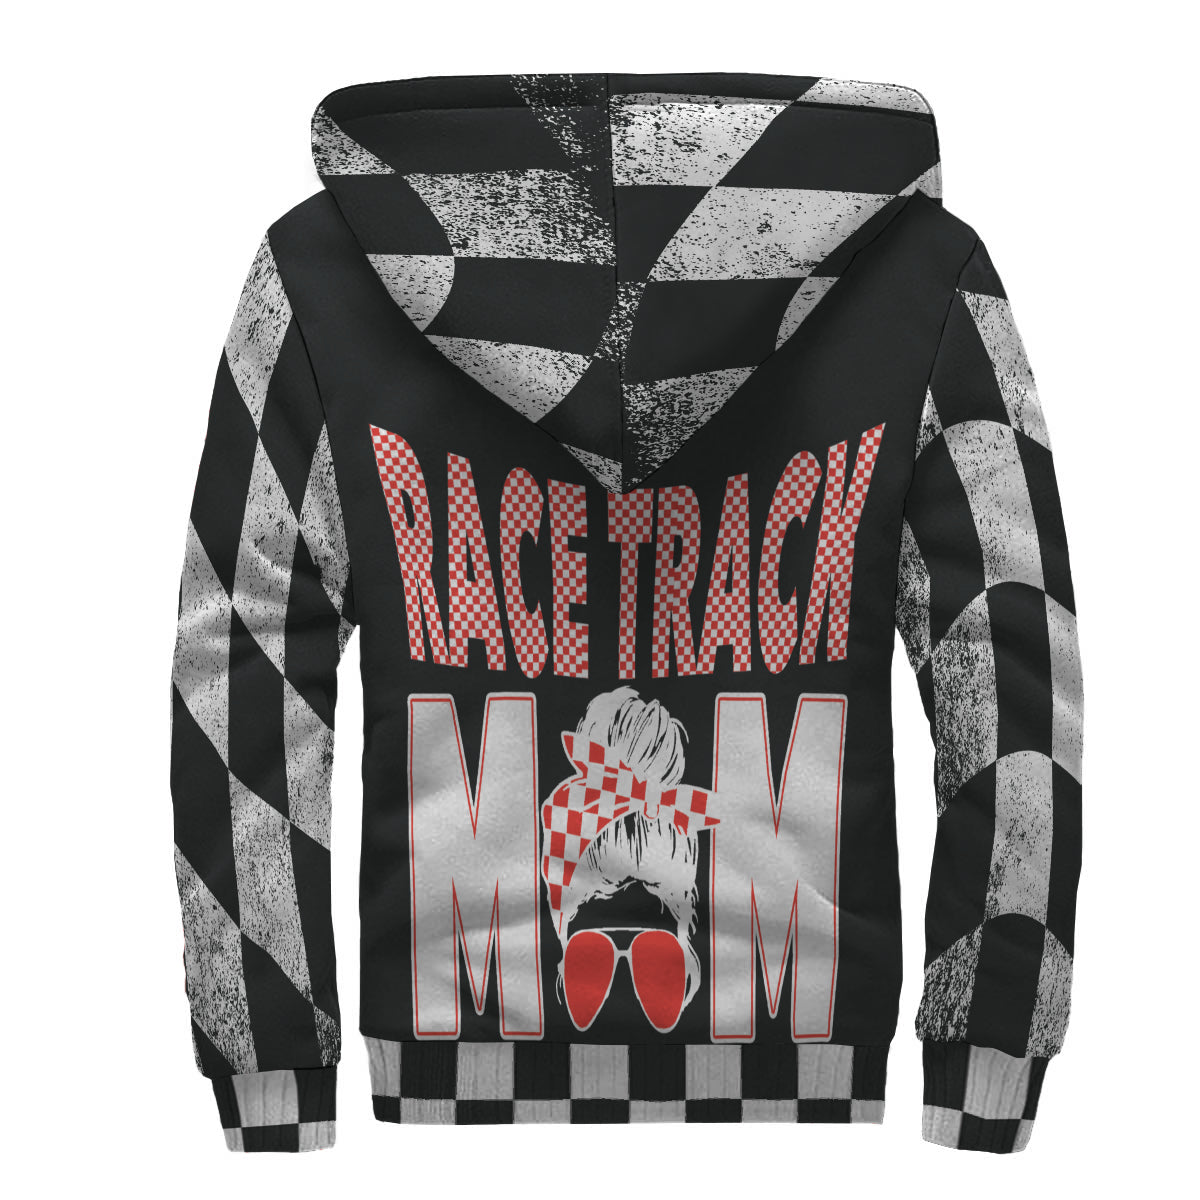 racing mom jacket